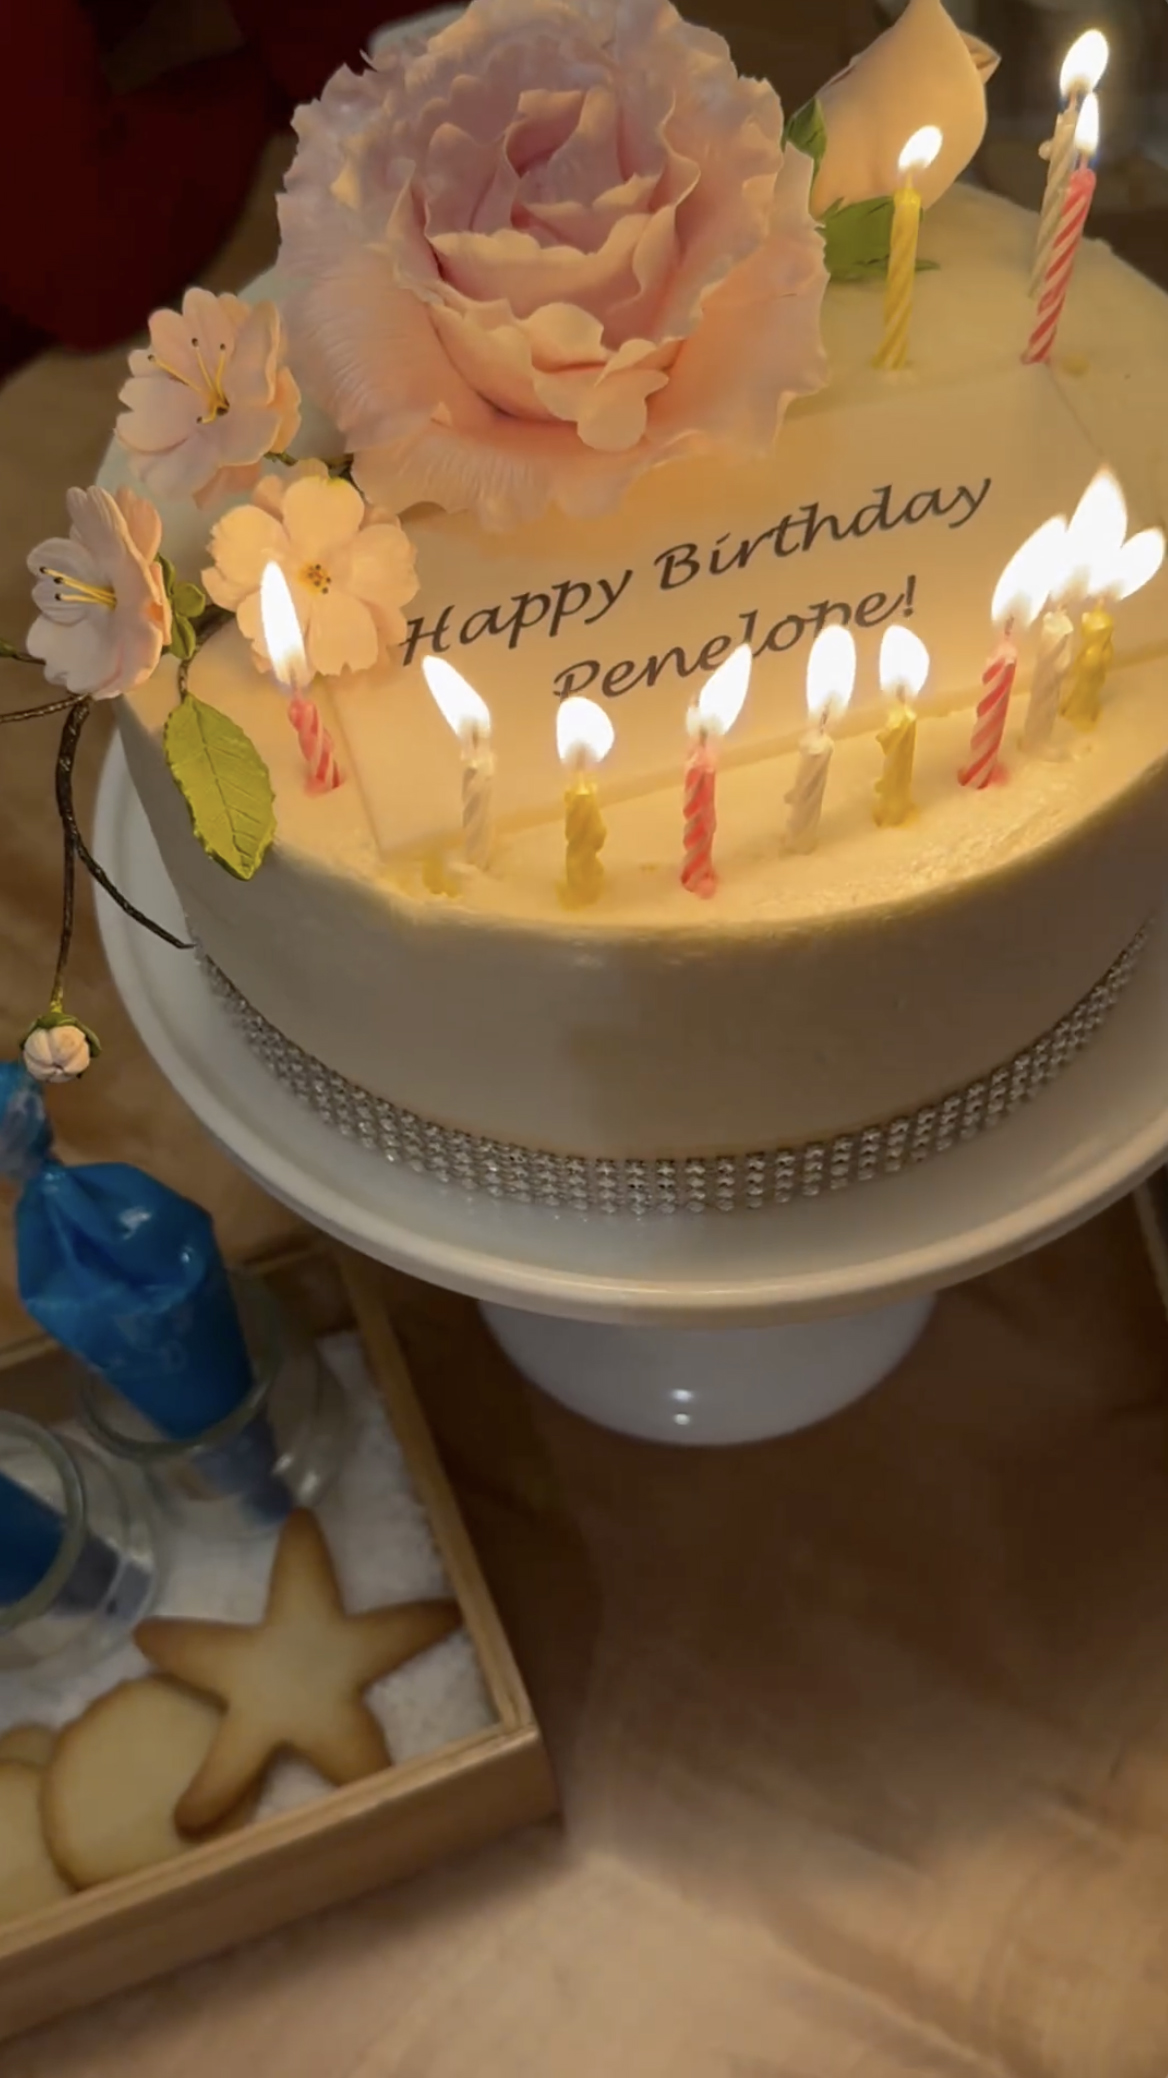 Kourtney Kardashian celebrates her daughter with a cute birthday cake